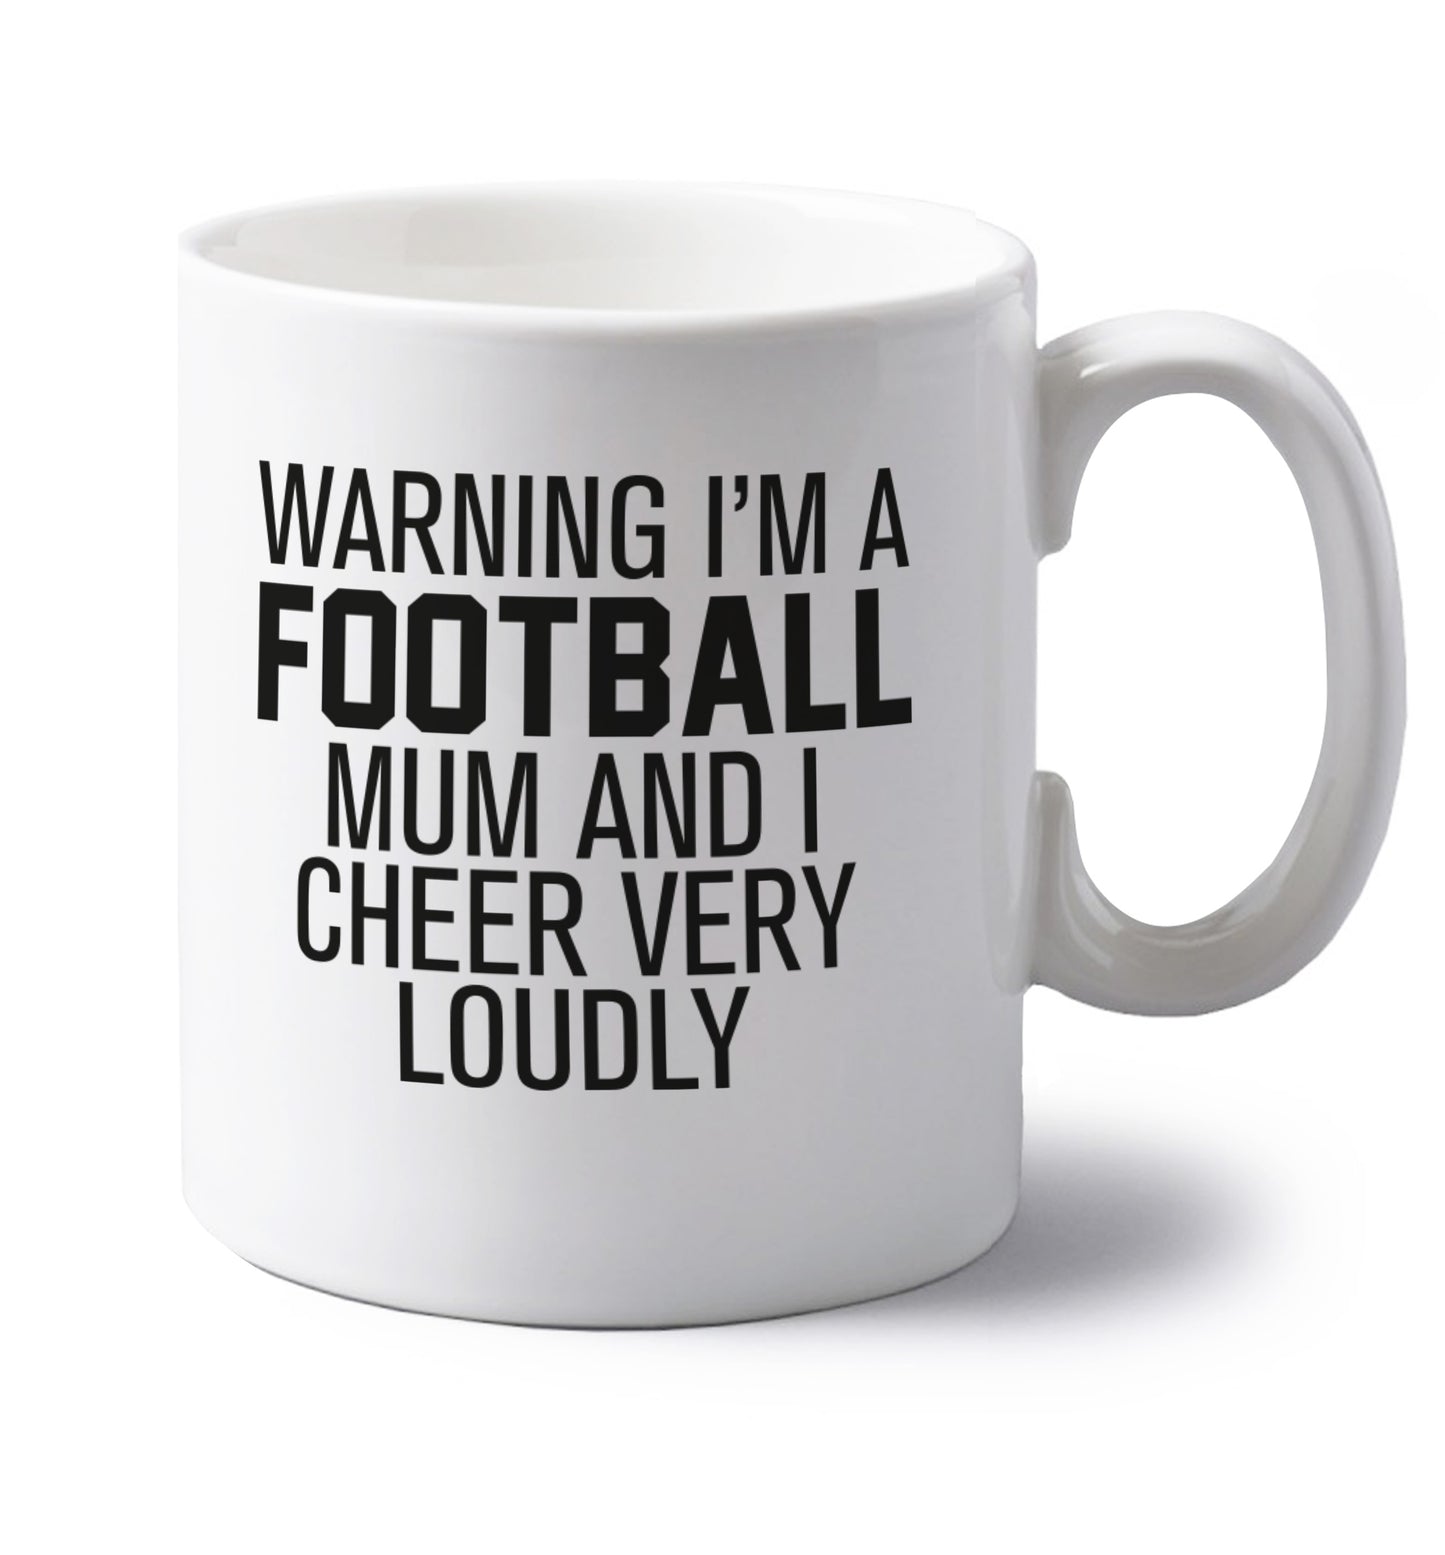 Warning I'm a football mum and I cheer very loudly left handed white ceramic mug 